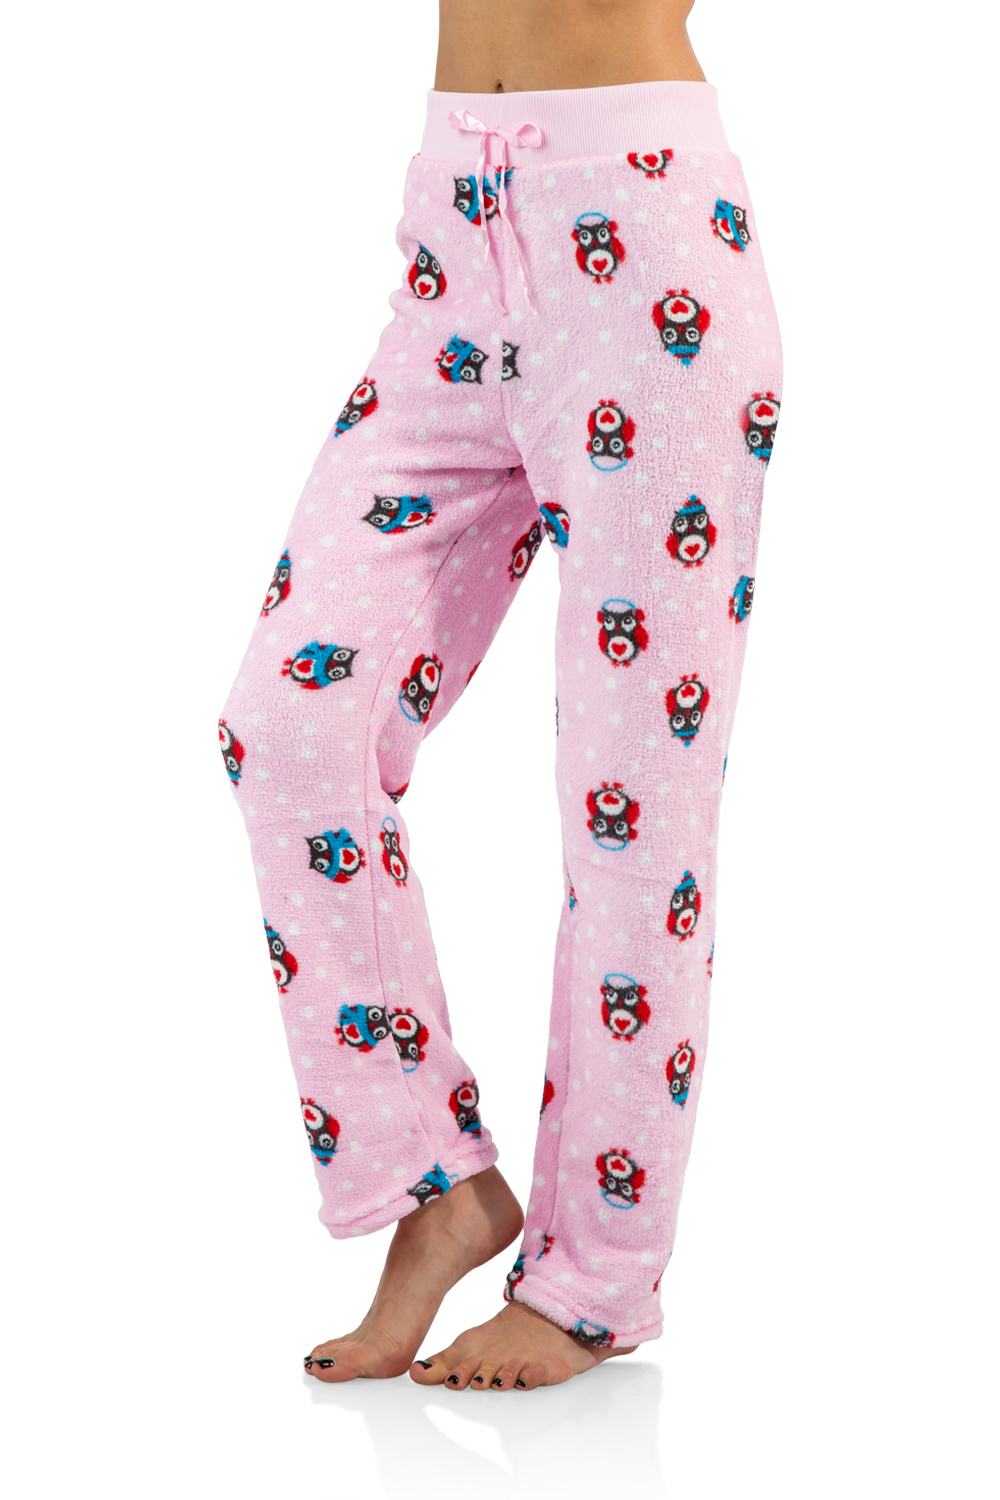 Women Ladies Pyjama Set Details about Novelty Ladies Polar Bear ...